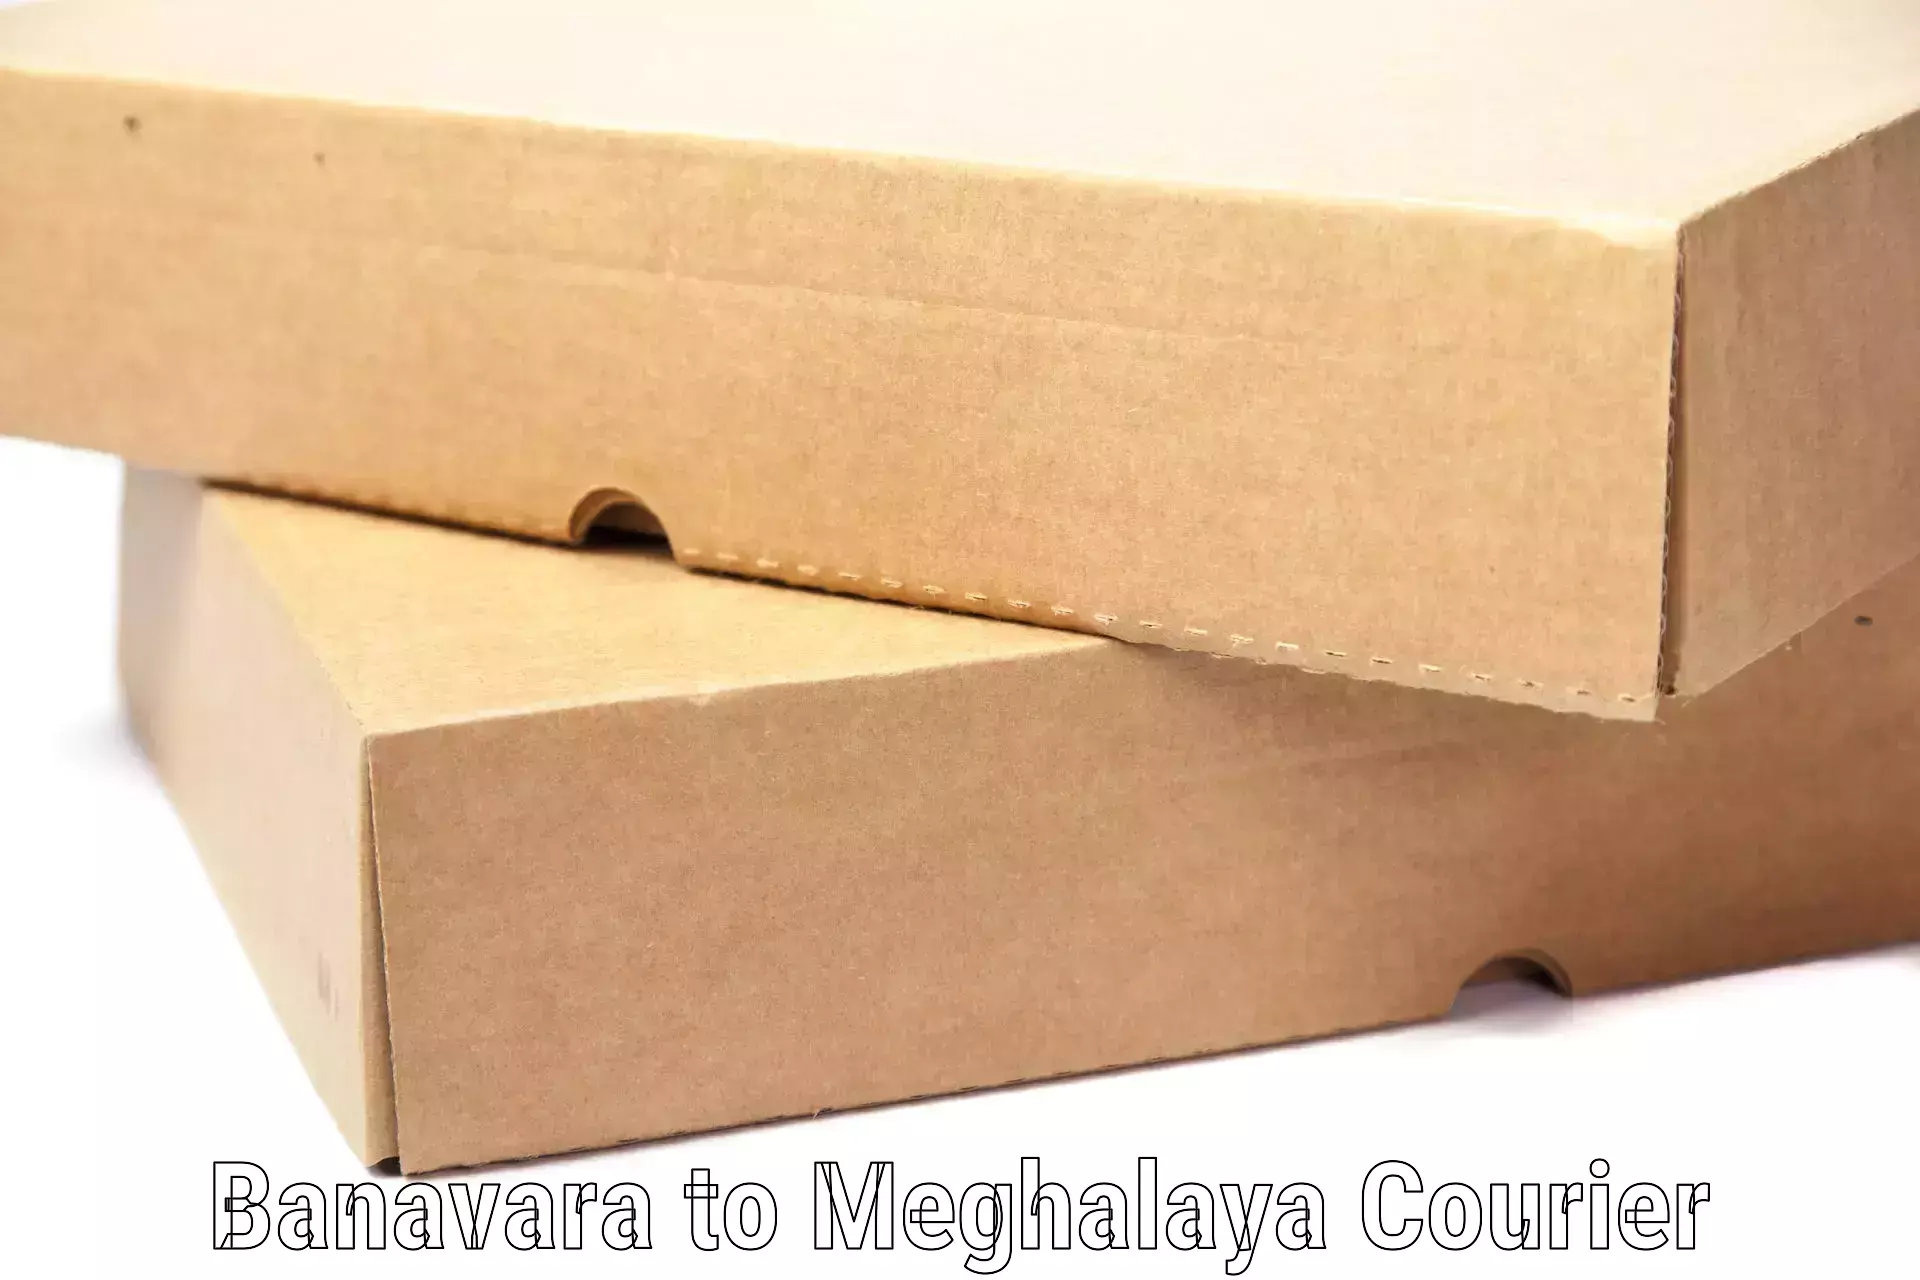 Personal effects shipping in Banavara to Meghalaya